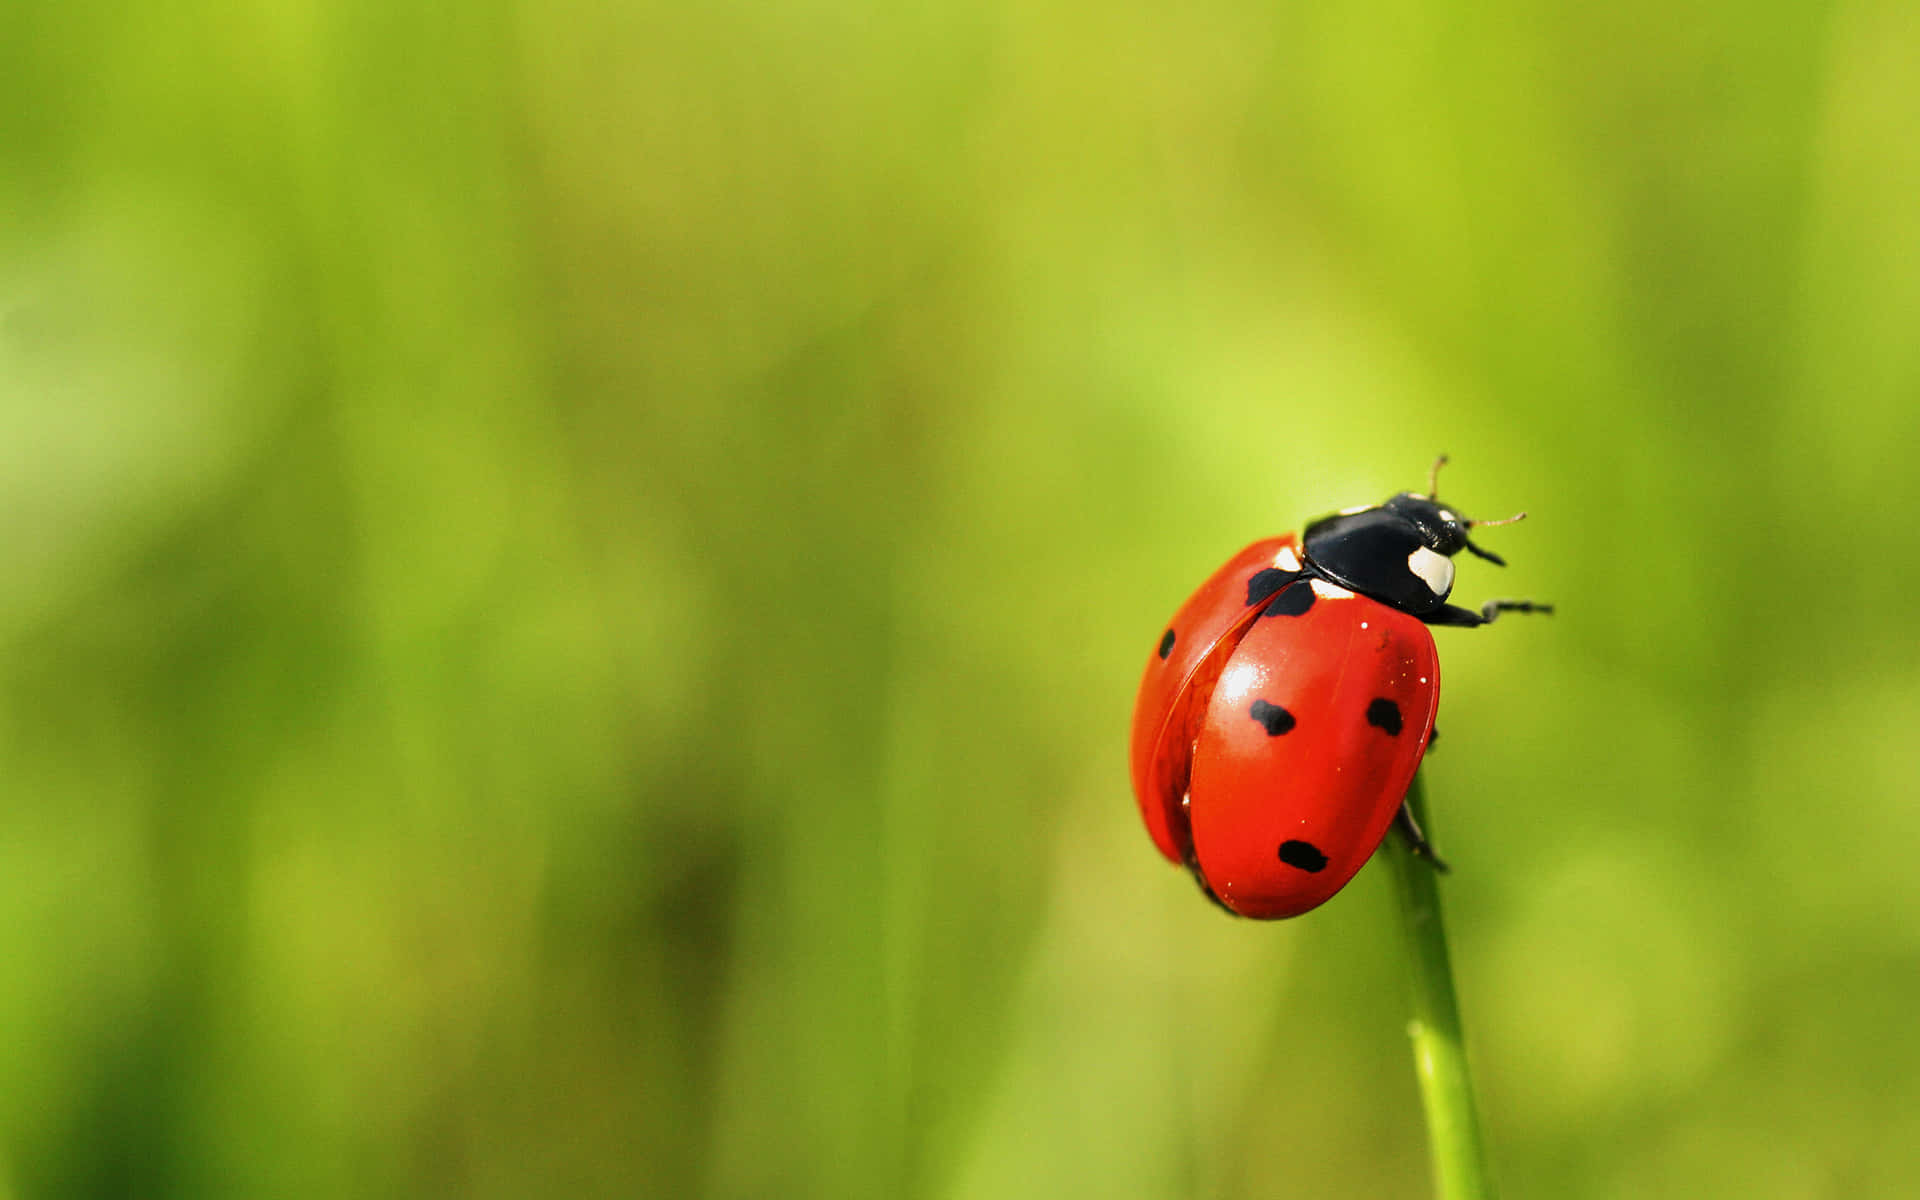 A Ladybug Sitting on a Petal